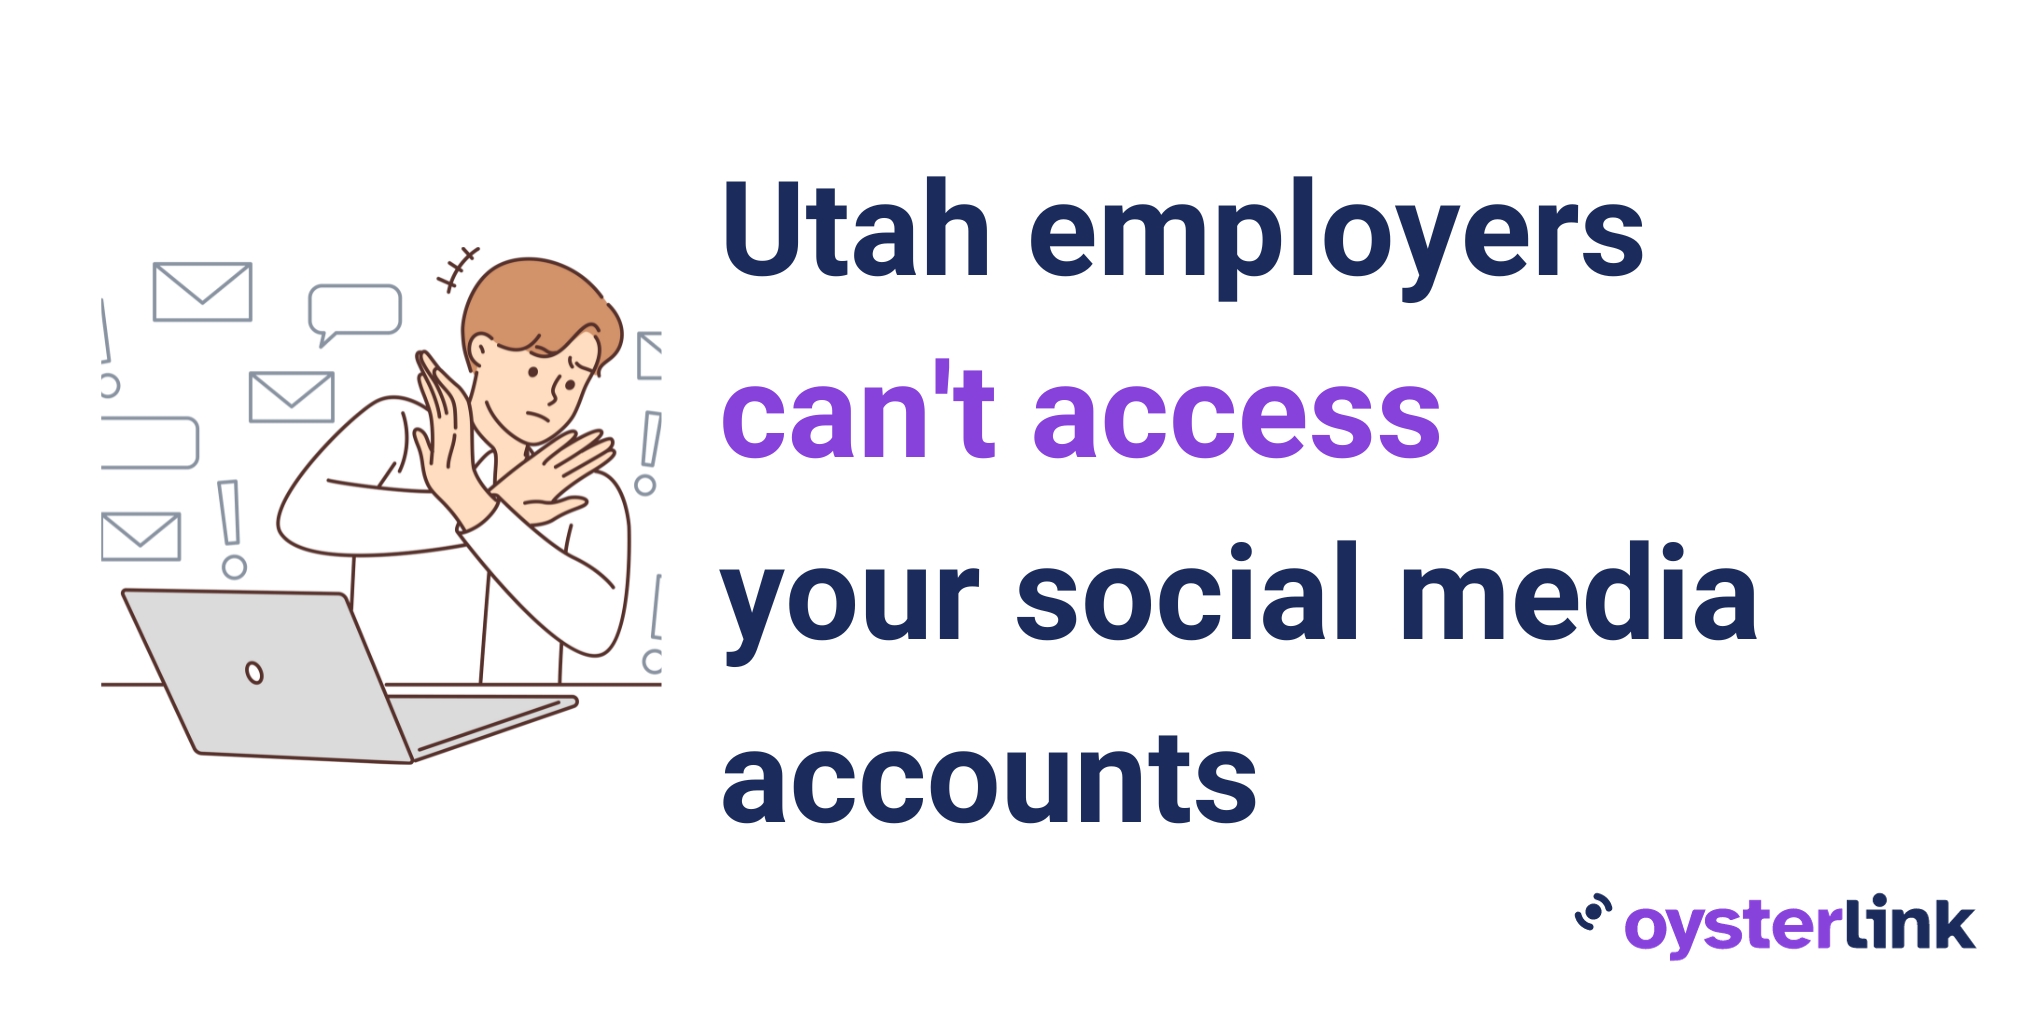 Utah Internet Employment Privacy Act